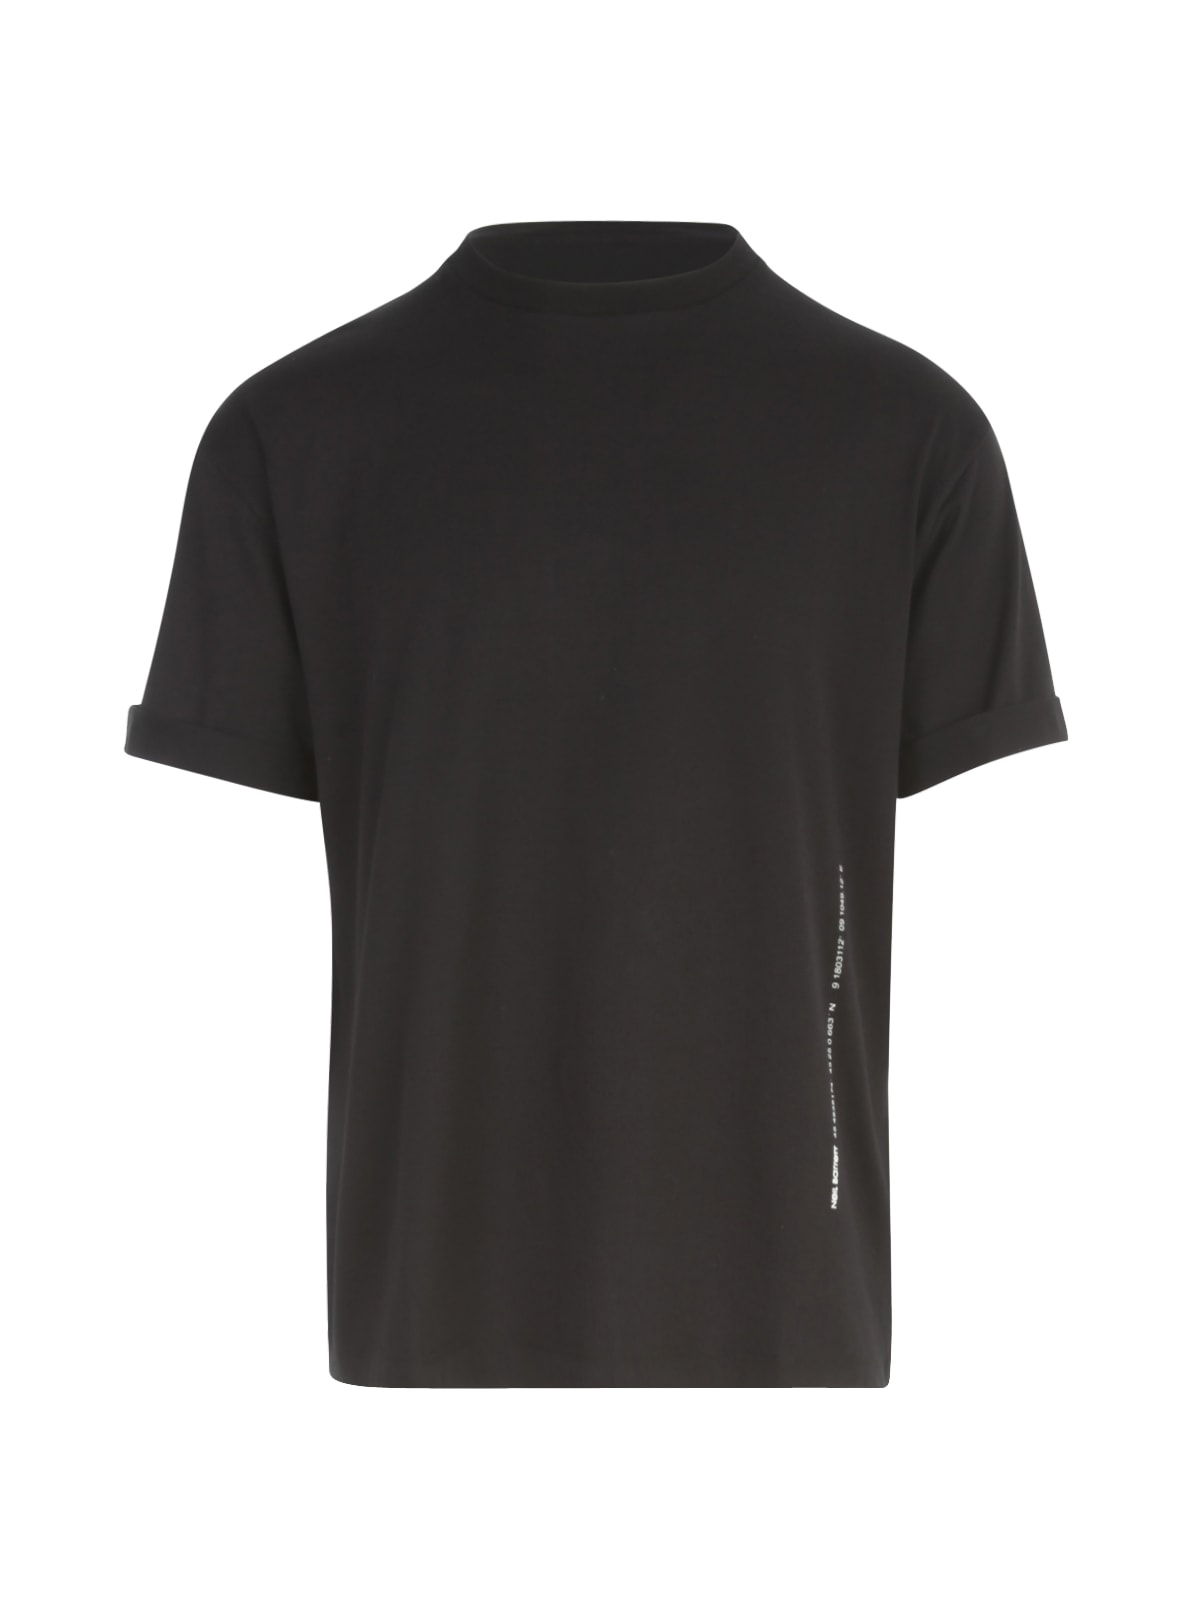 NEIL BARRETT T-shirts TRAVEL T-SHIRT WITH ENAMEL BOLT BADGE